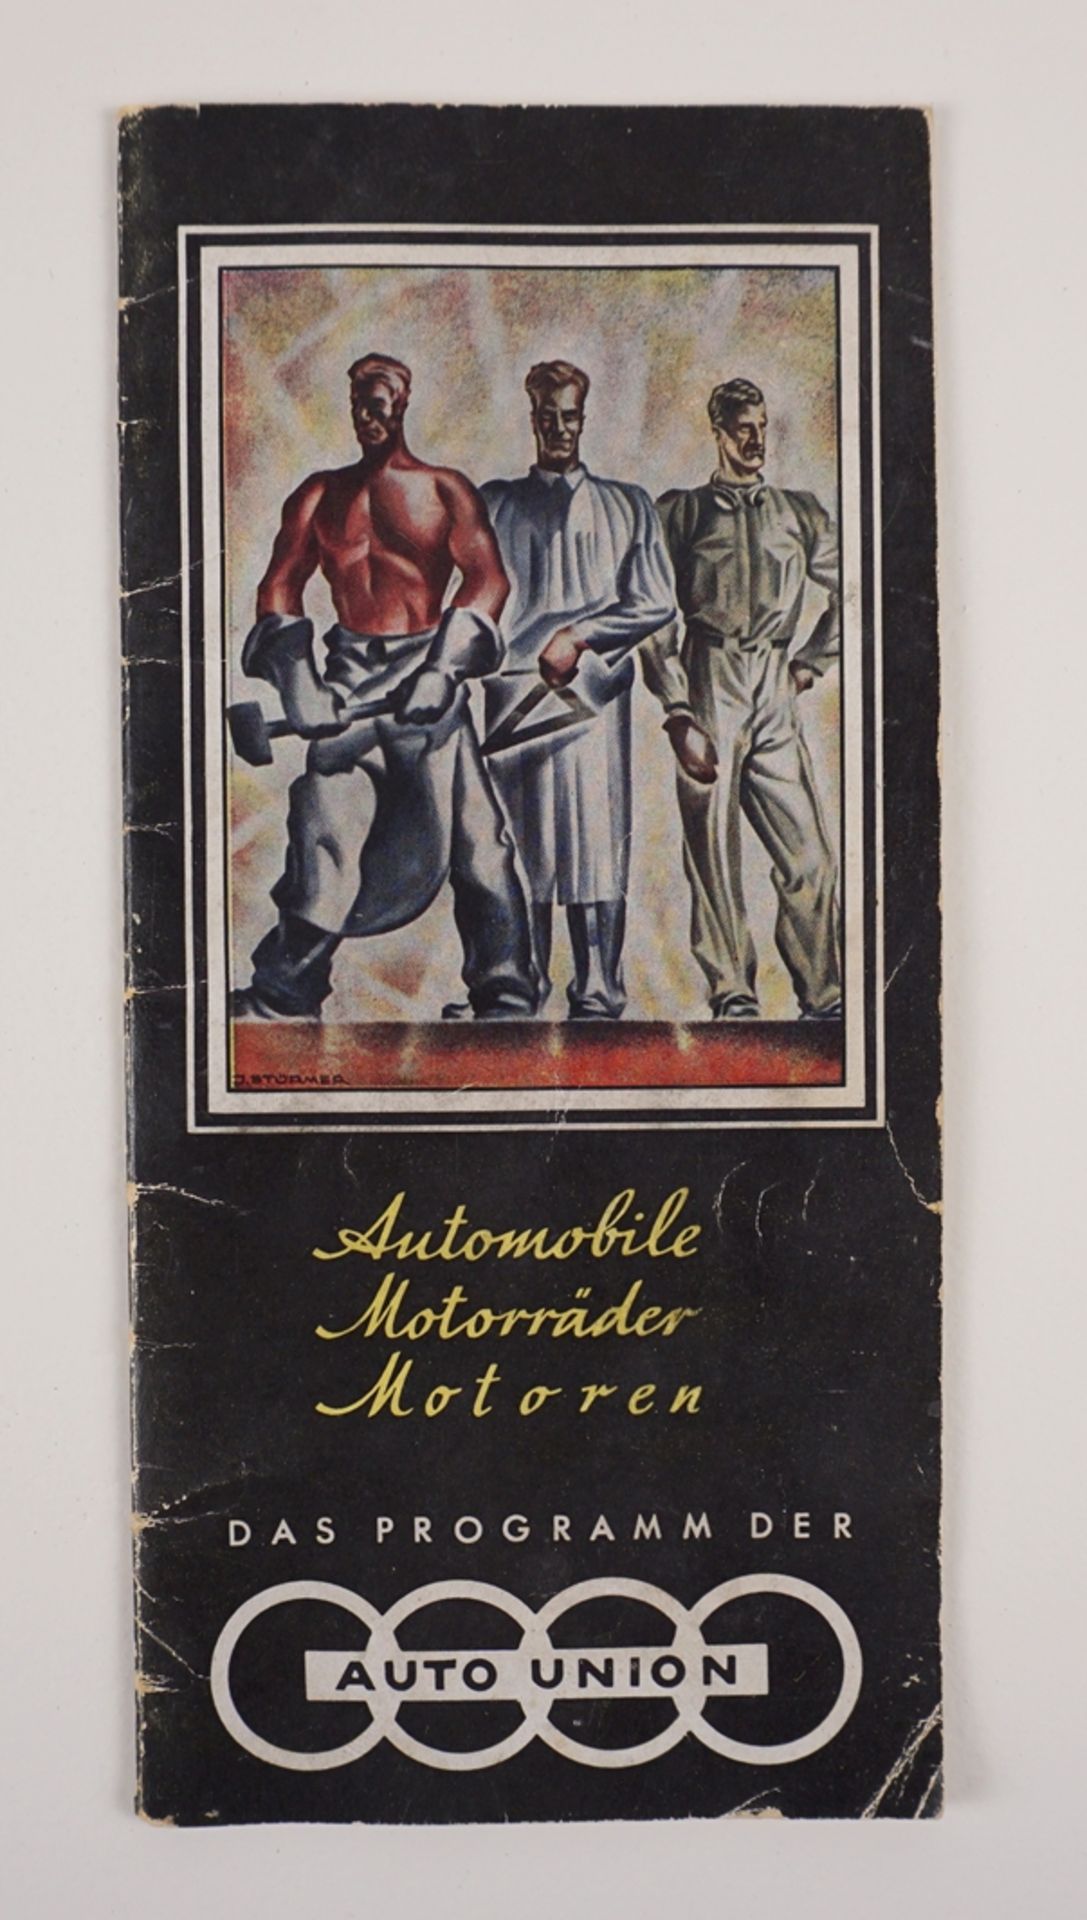 Verkaufsprospekt "Das Programm der Auto-Union", 1939 (o.Jz.)